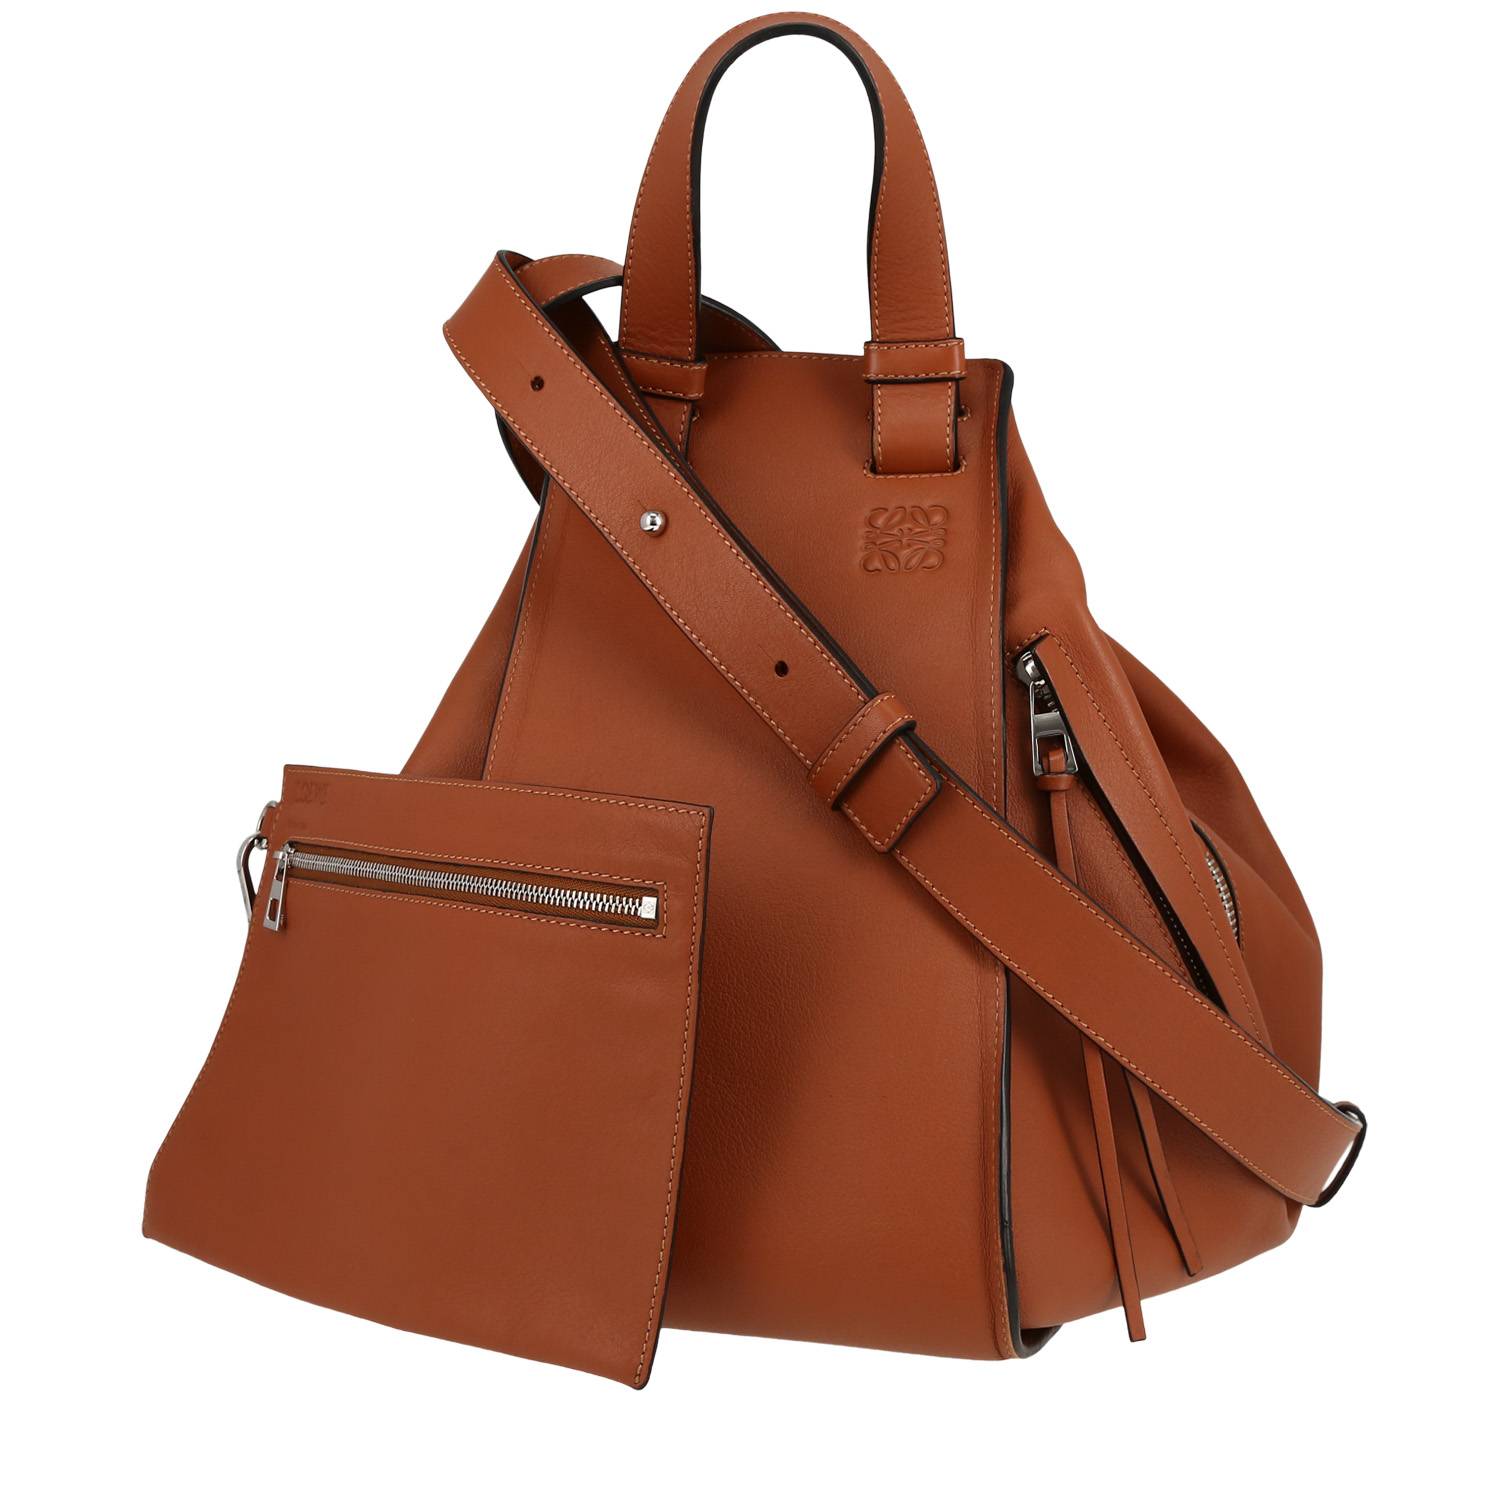 Hammock Large Model Handbag In Leather